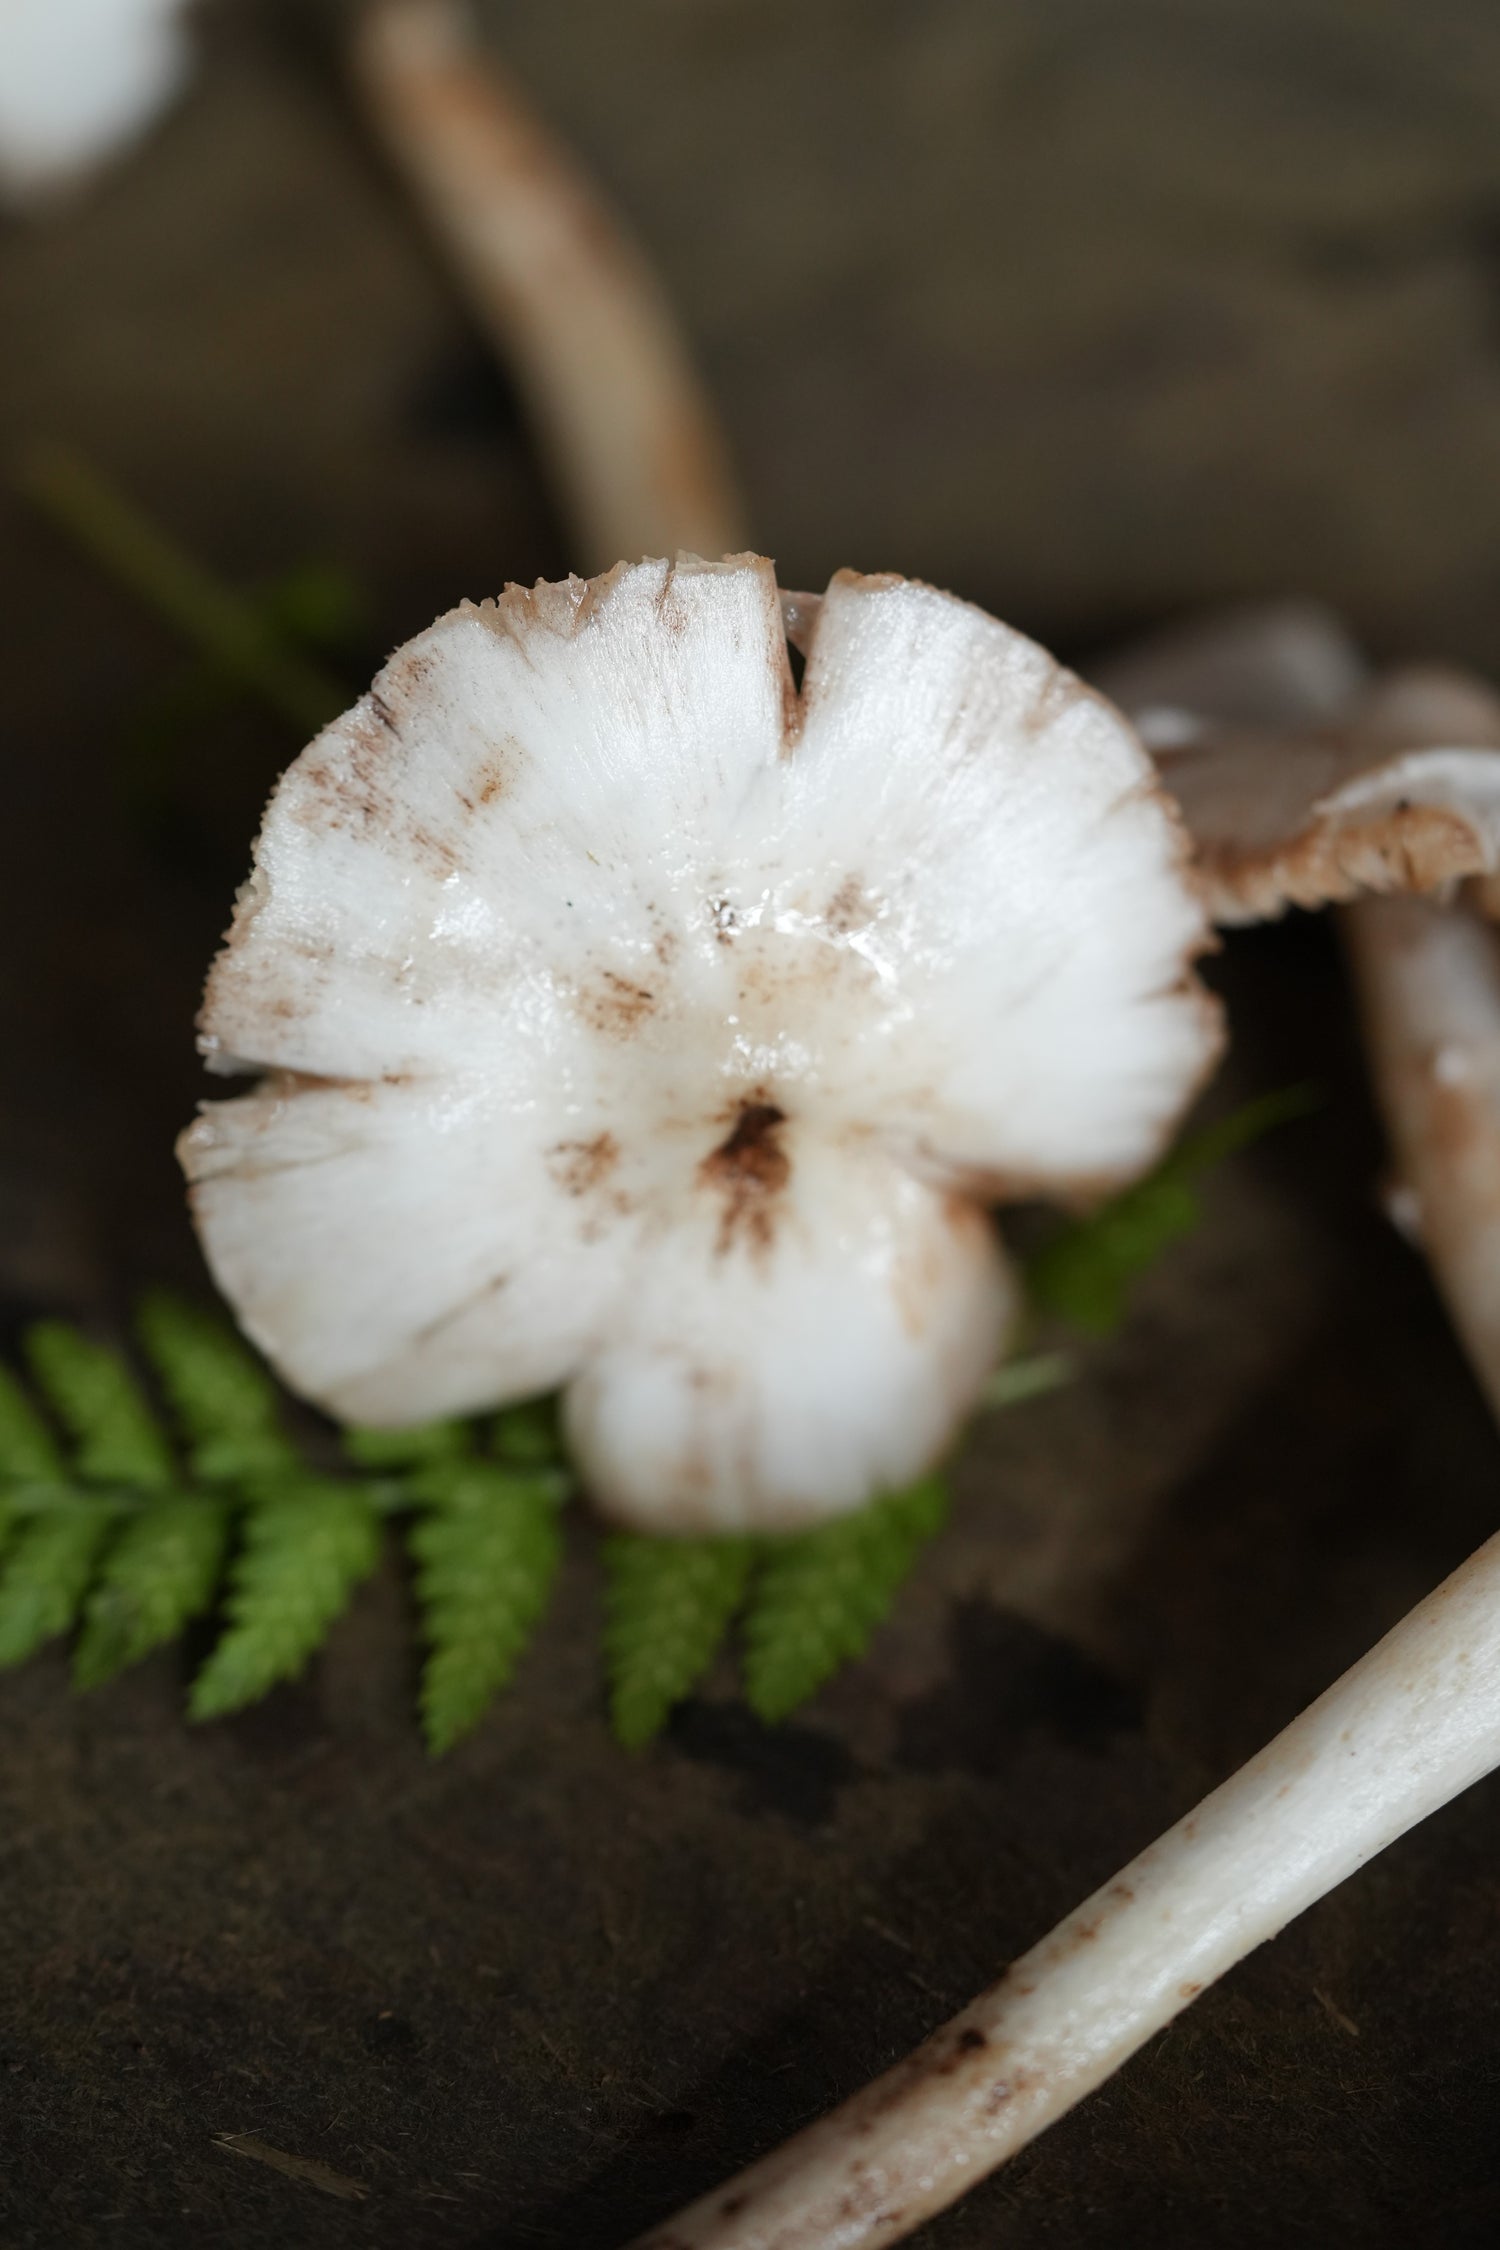 Alimbi / अळिंबी / Wild Mushroom / Agaricaceae